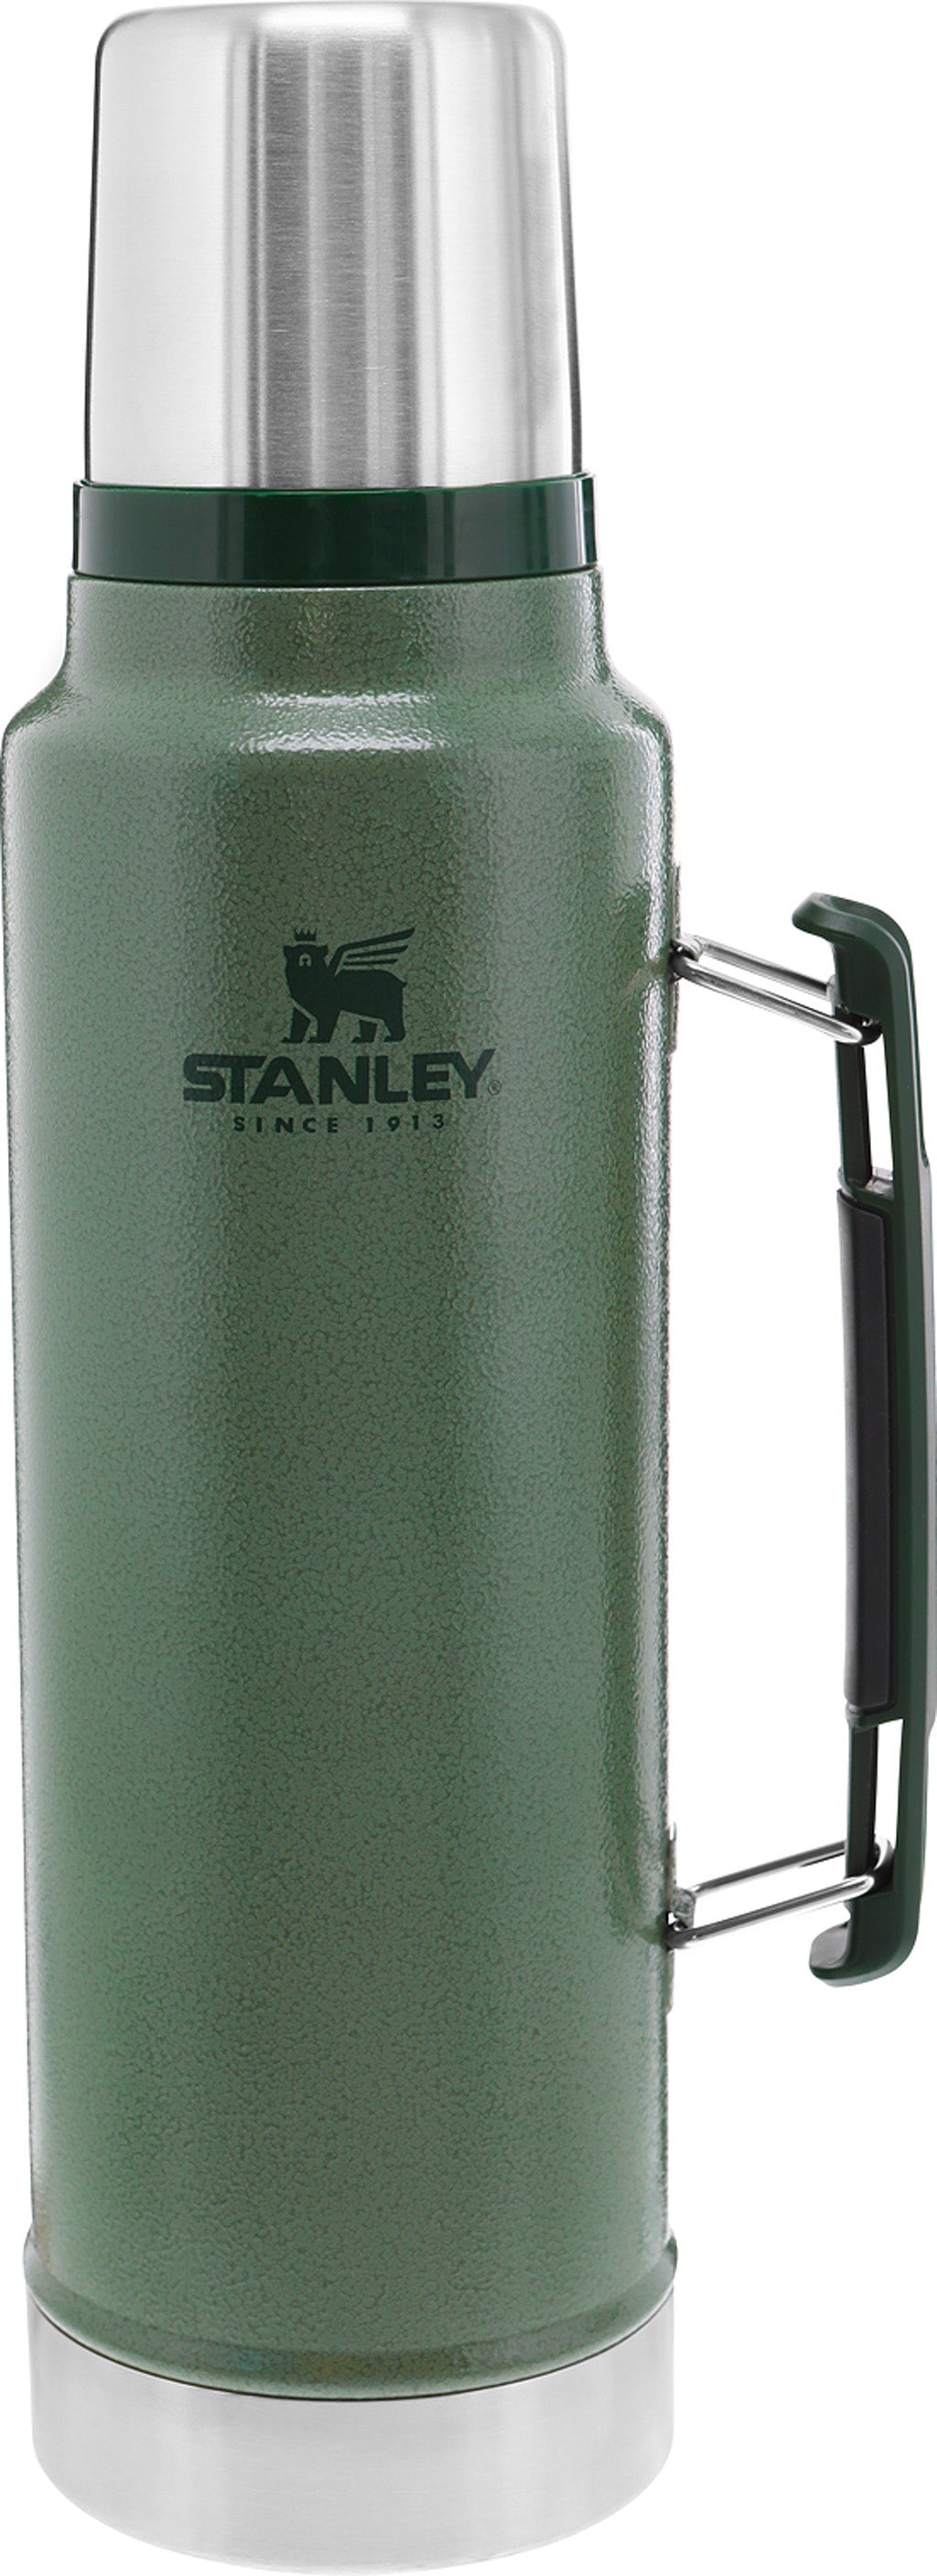 Stanley Stanley Classic Legendary Bottle 2.5 QT